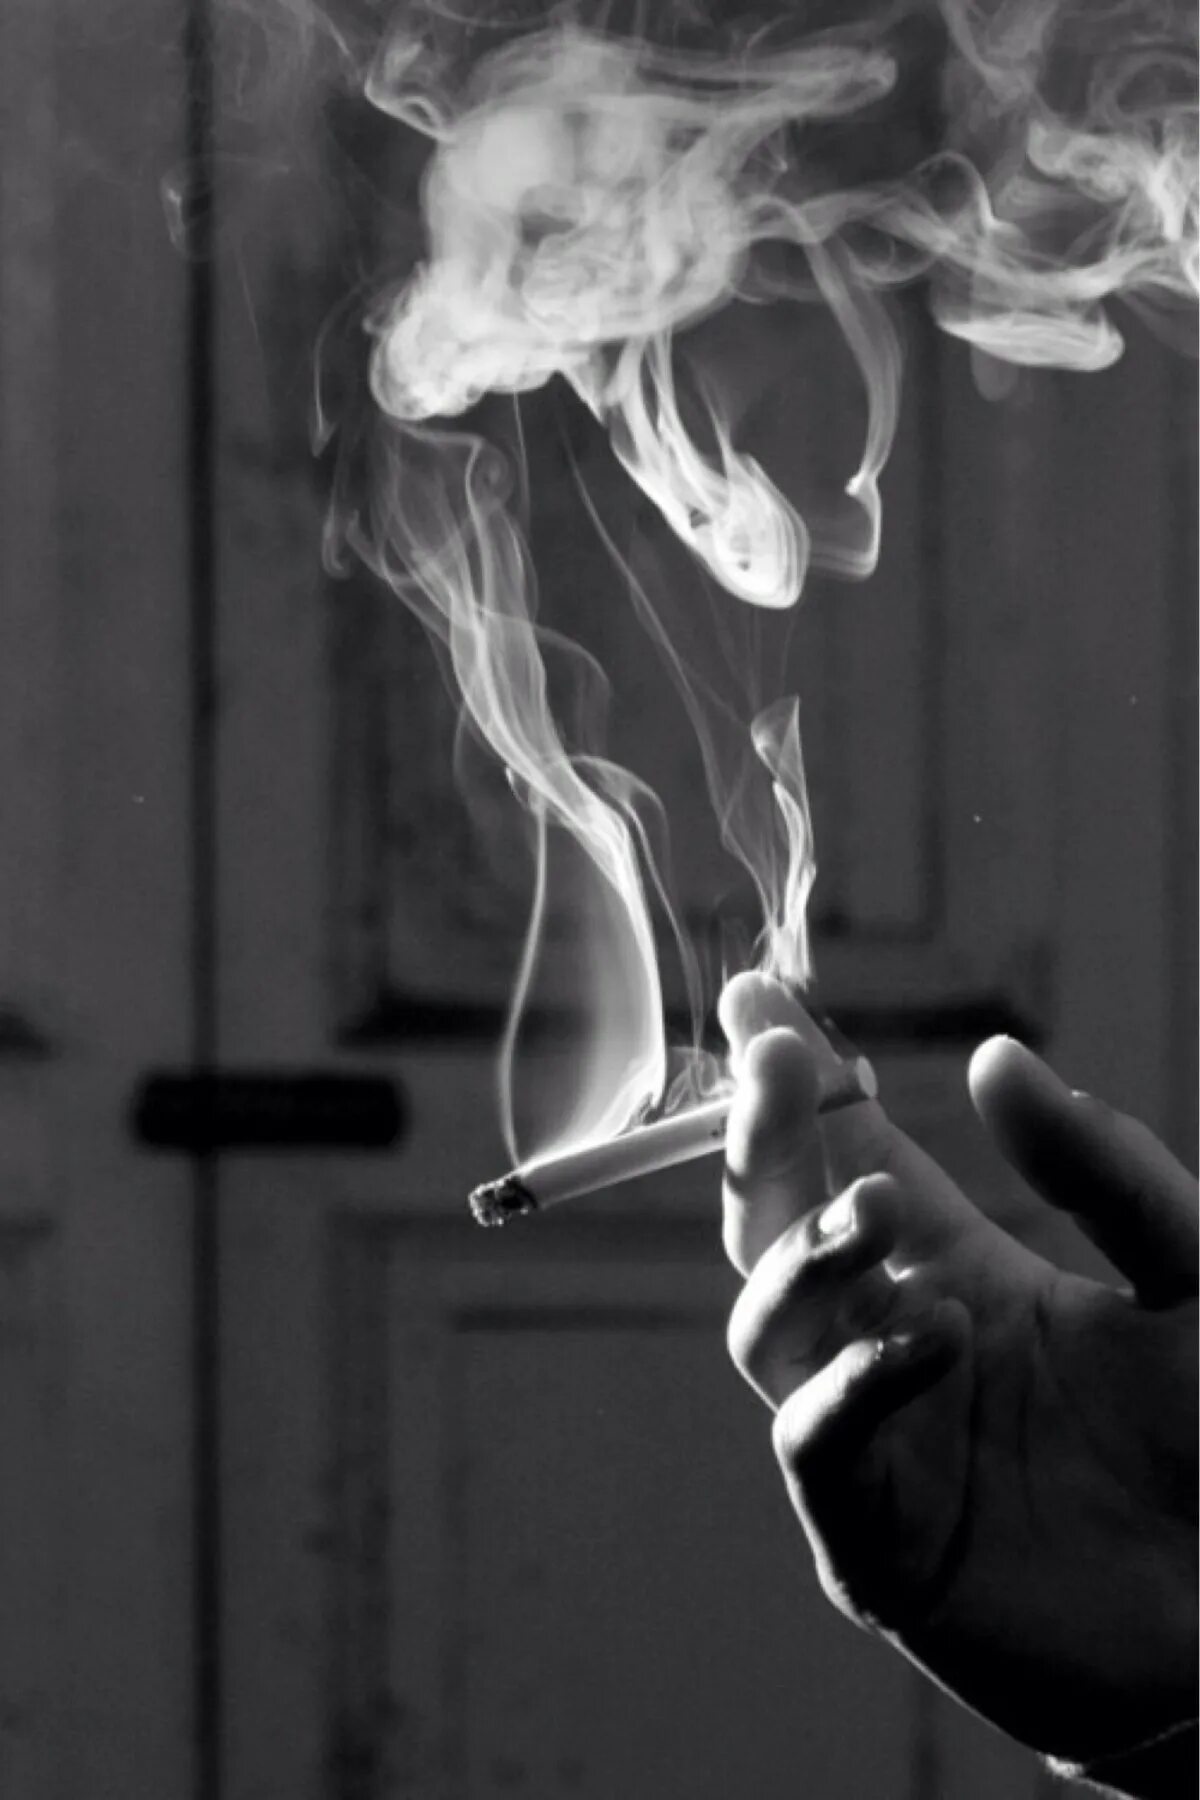 Сигаретный дым. Курение Эстетика. Мужская рука с сигаретой. Эстетика сигаретного дыма. Дым твоих сигарет